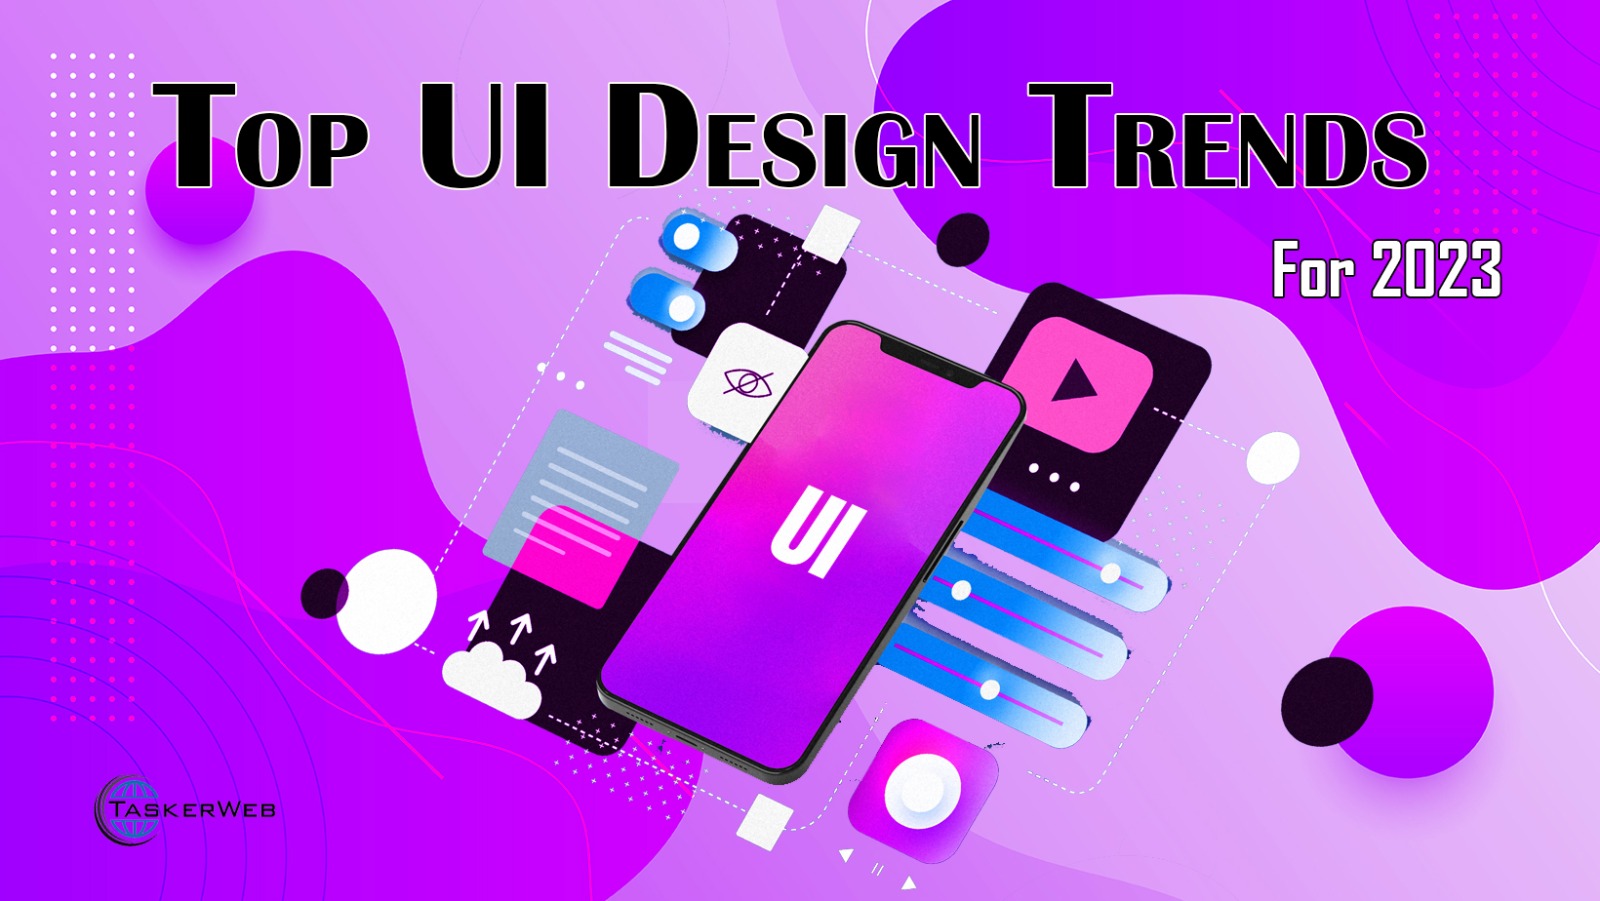 Top UI Design Trends For 2023